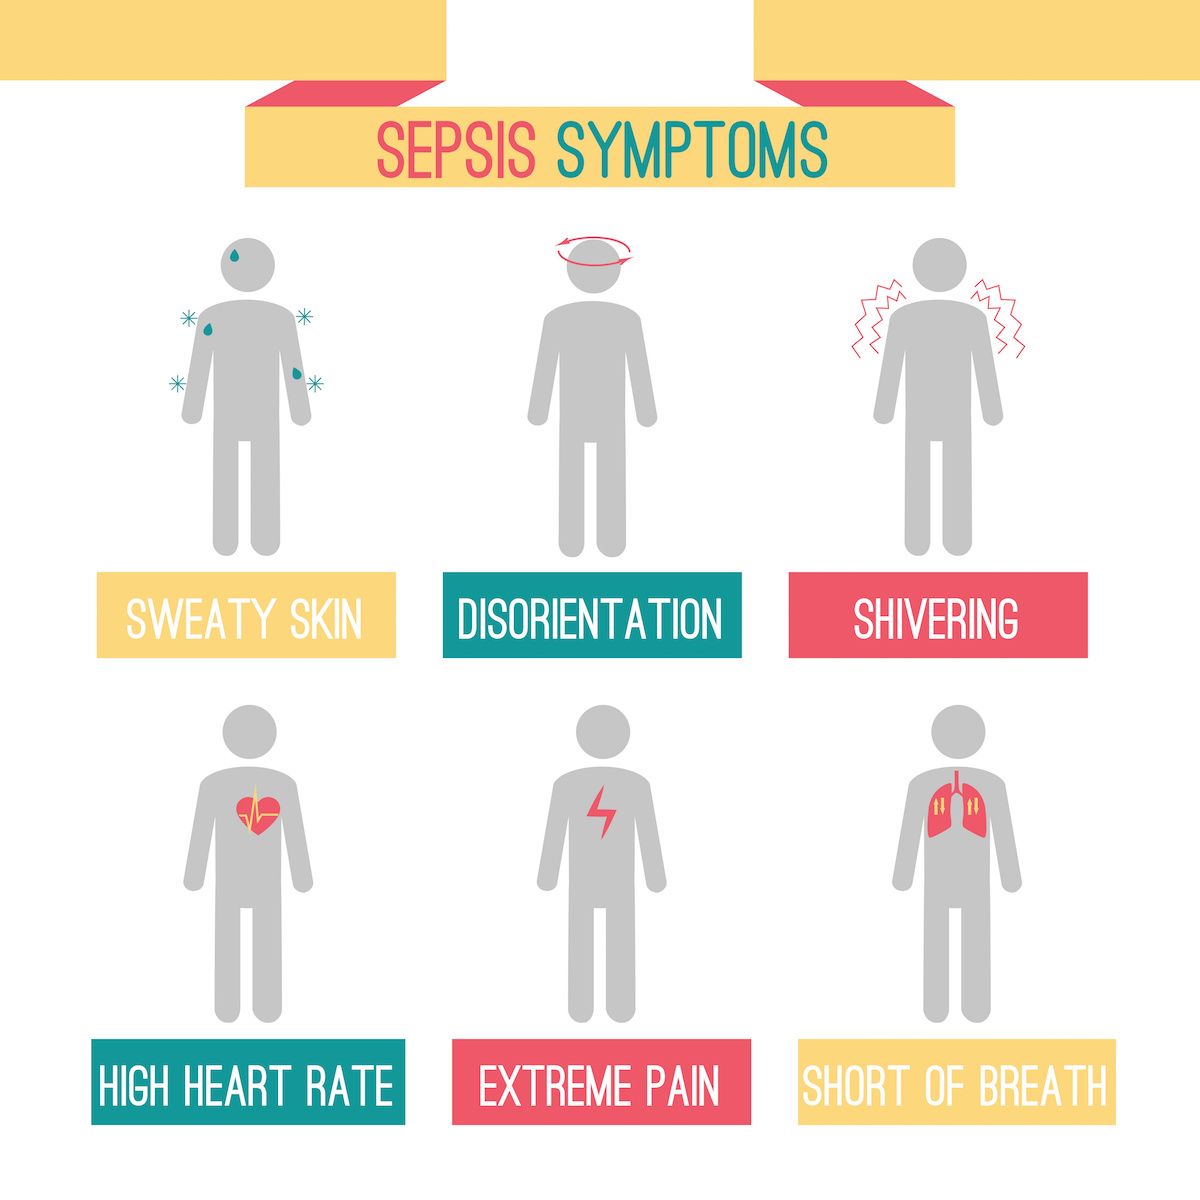 Illustration shows the symptoms of sepsis